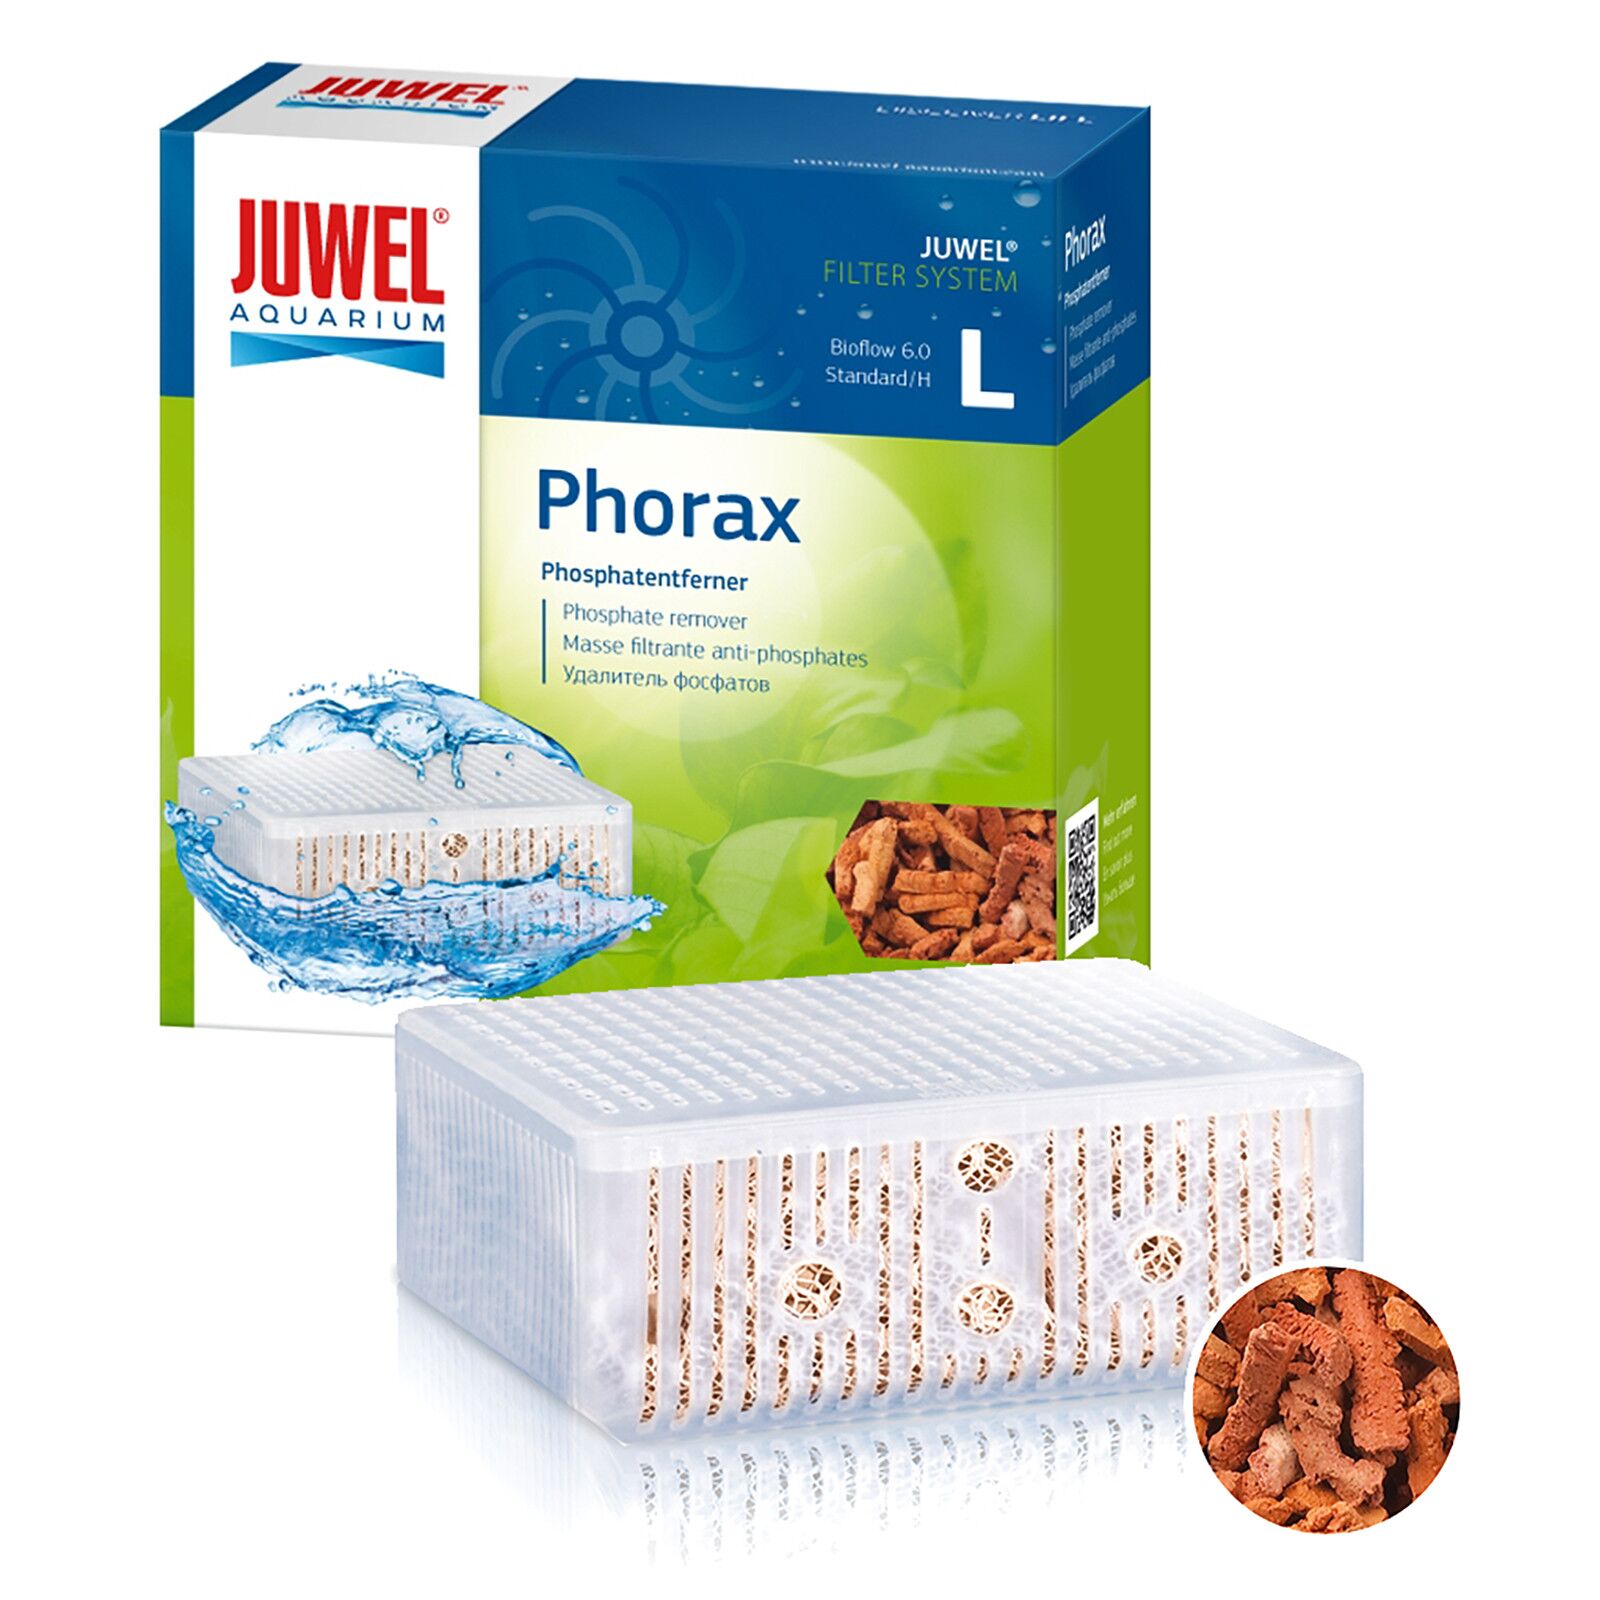 Juwel - Phorax Phosphatentferner